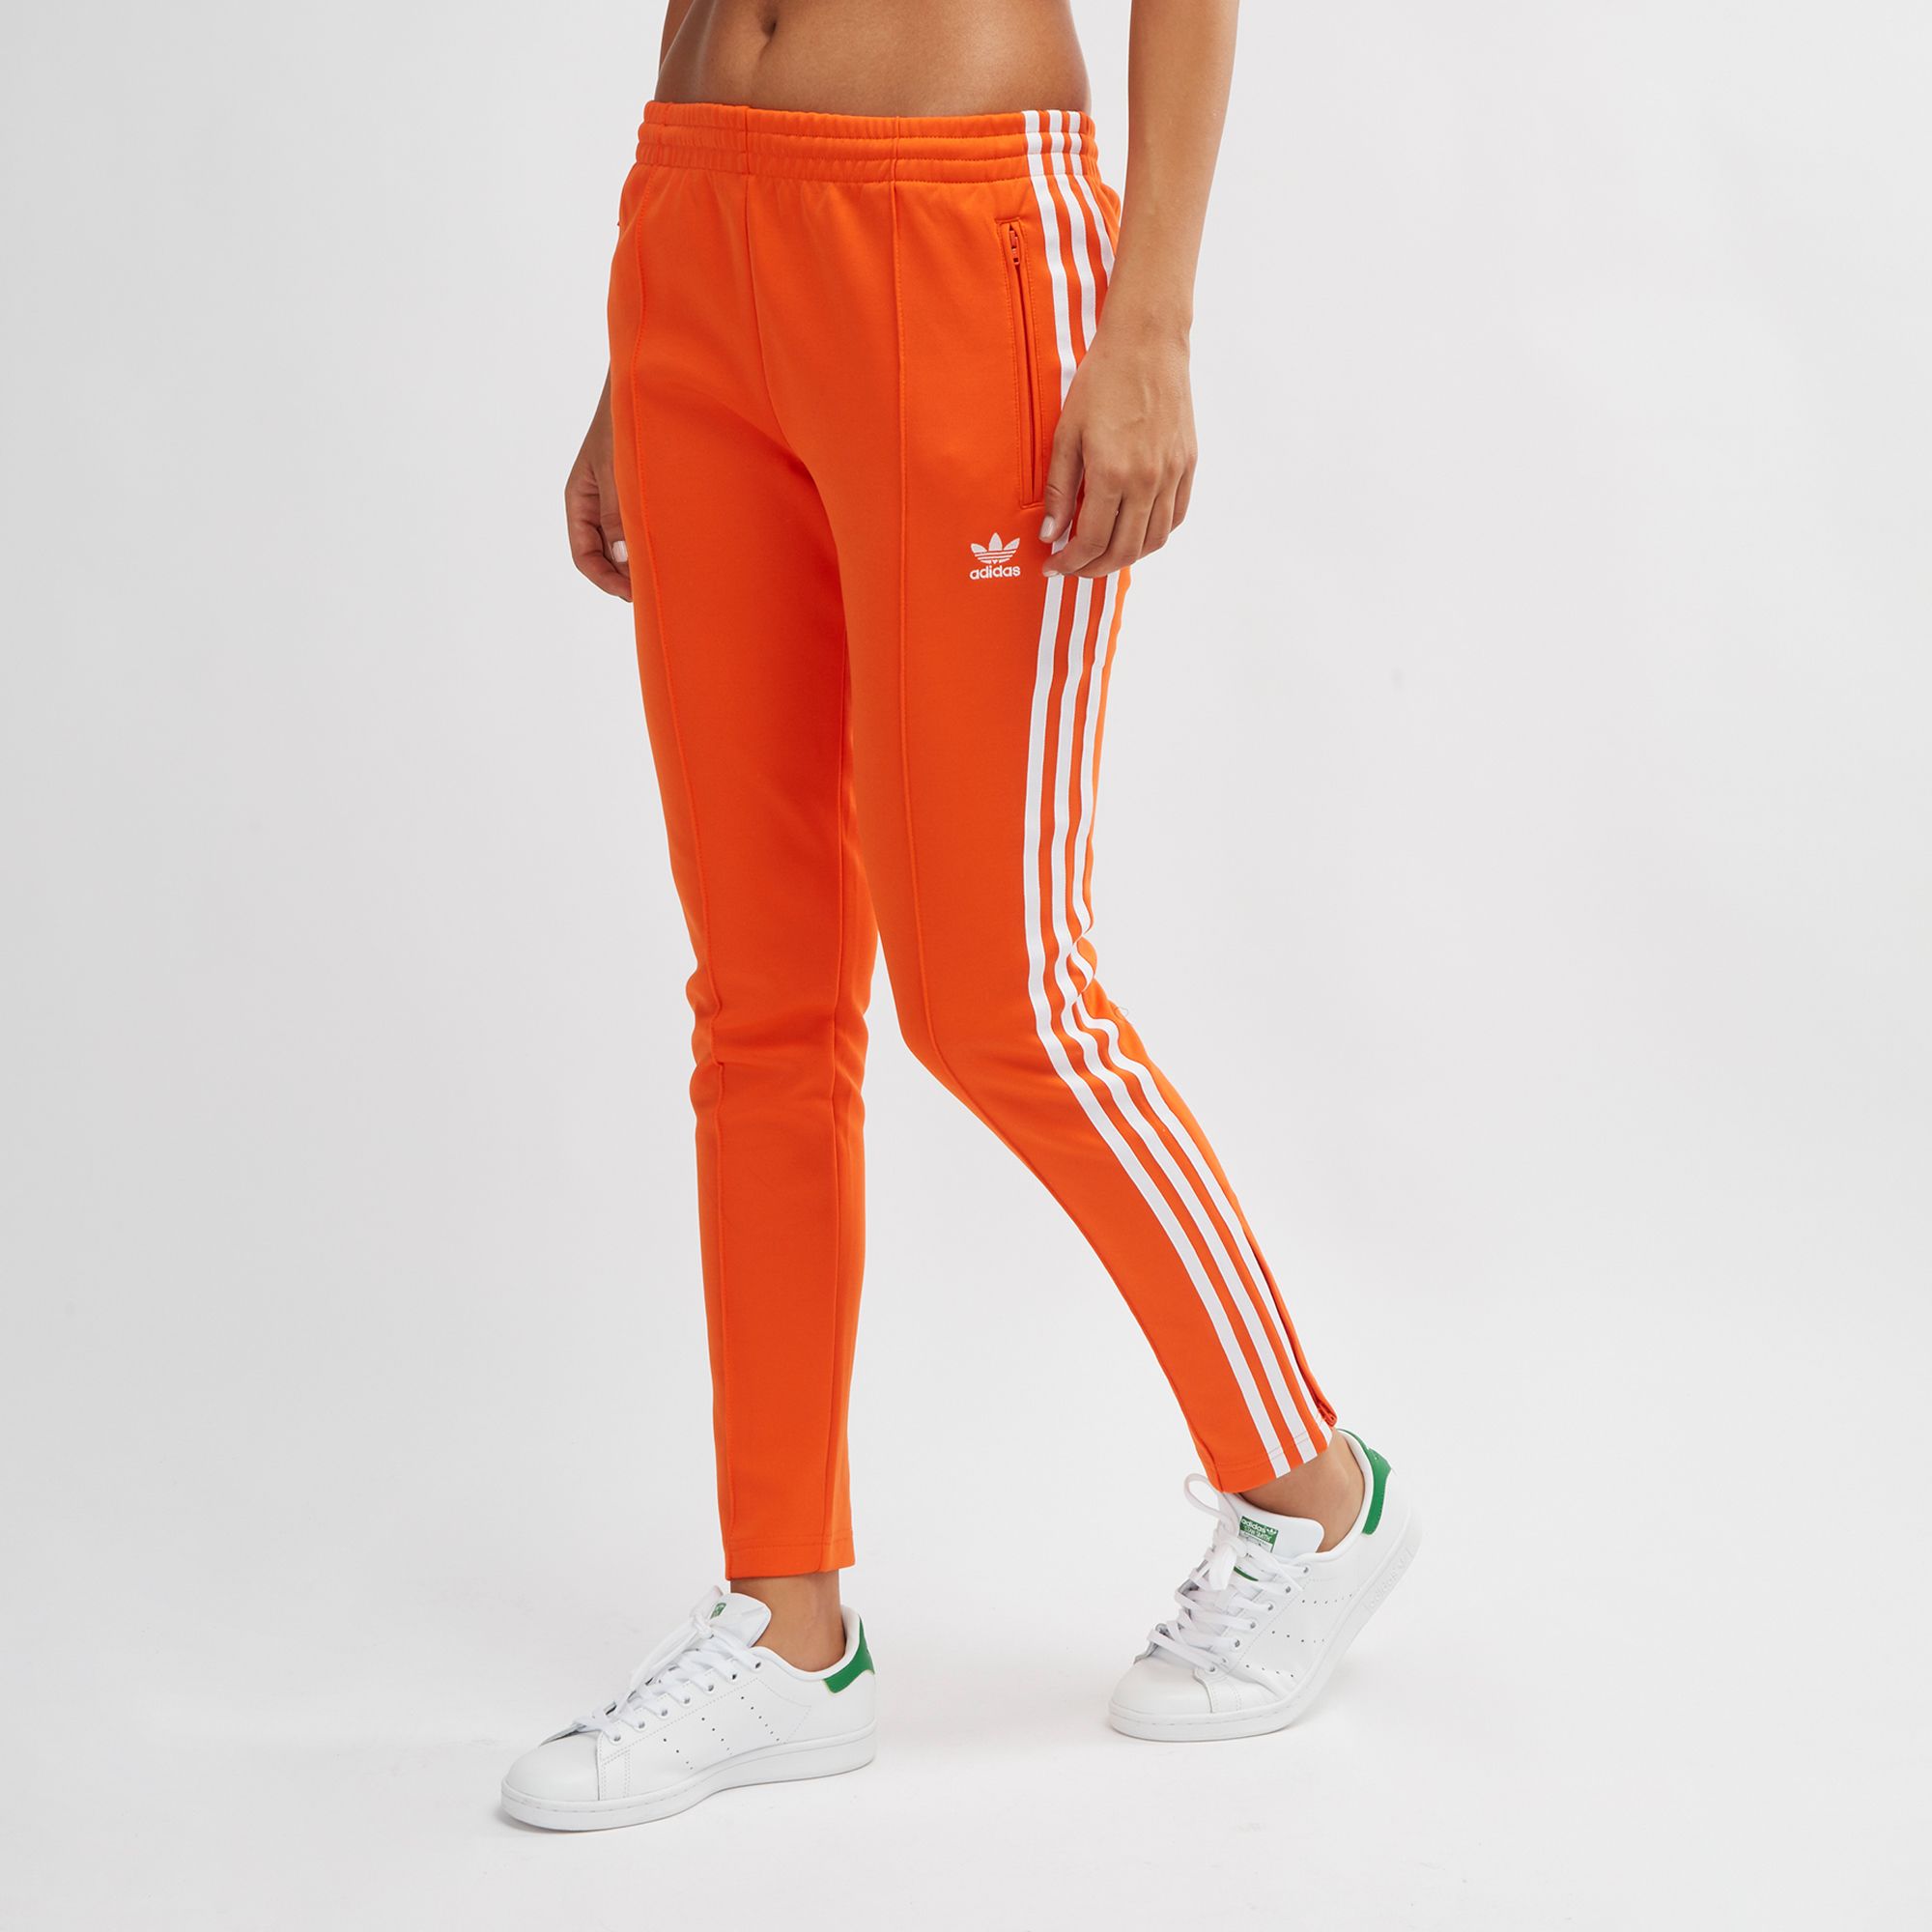 Parity \u003e orange track pants womens, Up 